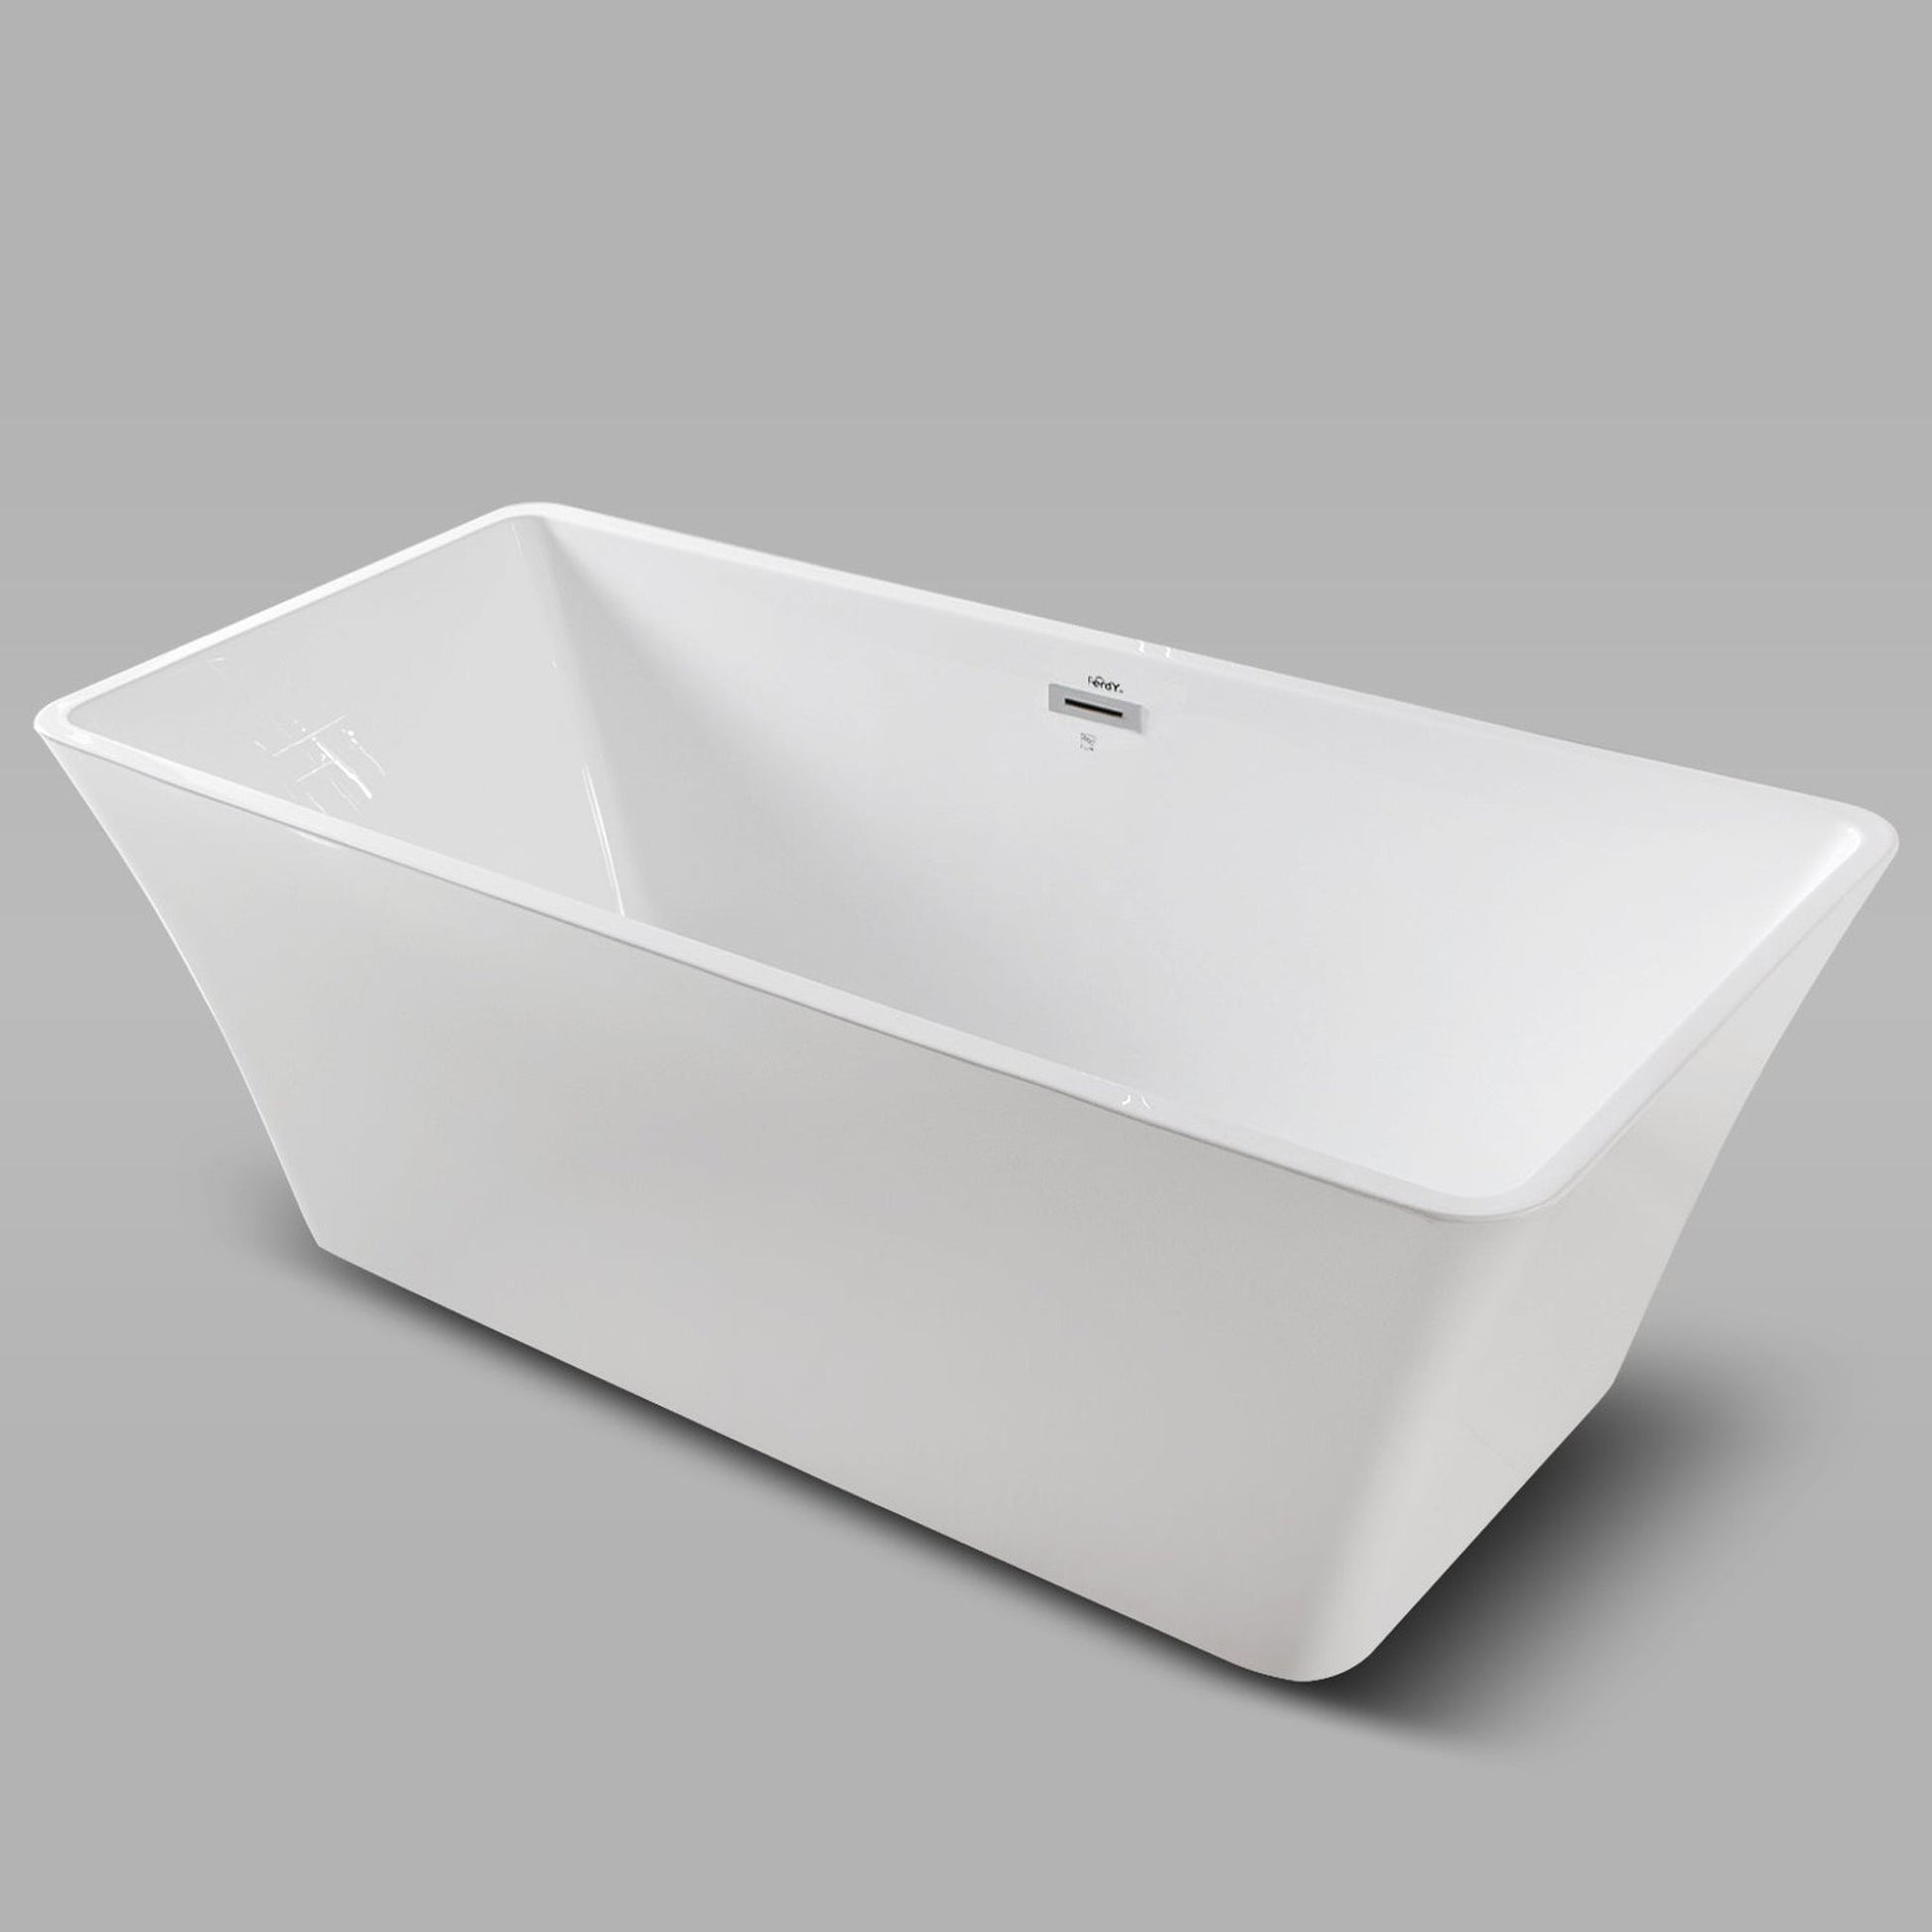 FerdY Sentosa 67" x 30" Rectangular Glossy White Acrylic Freestanding Double Slipper Soaking Bathtub With Chrome Drain and Overflow